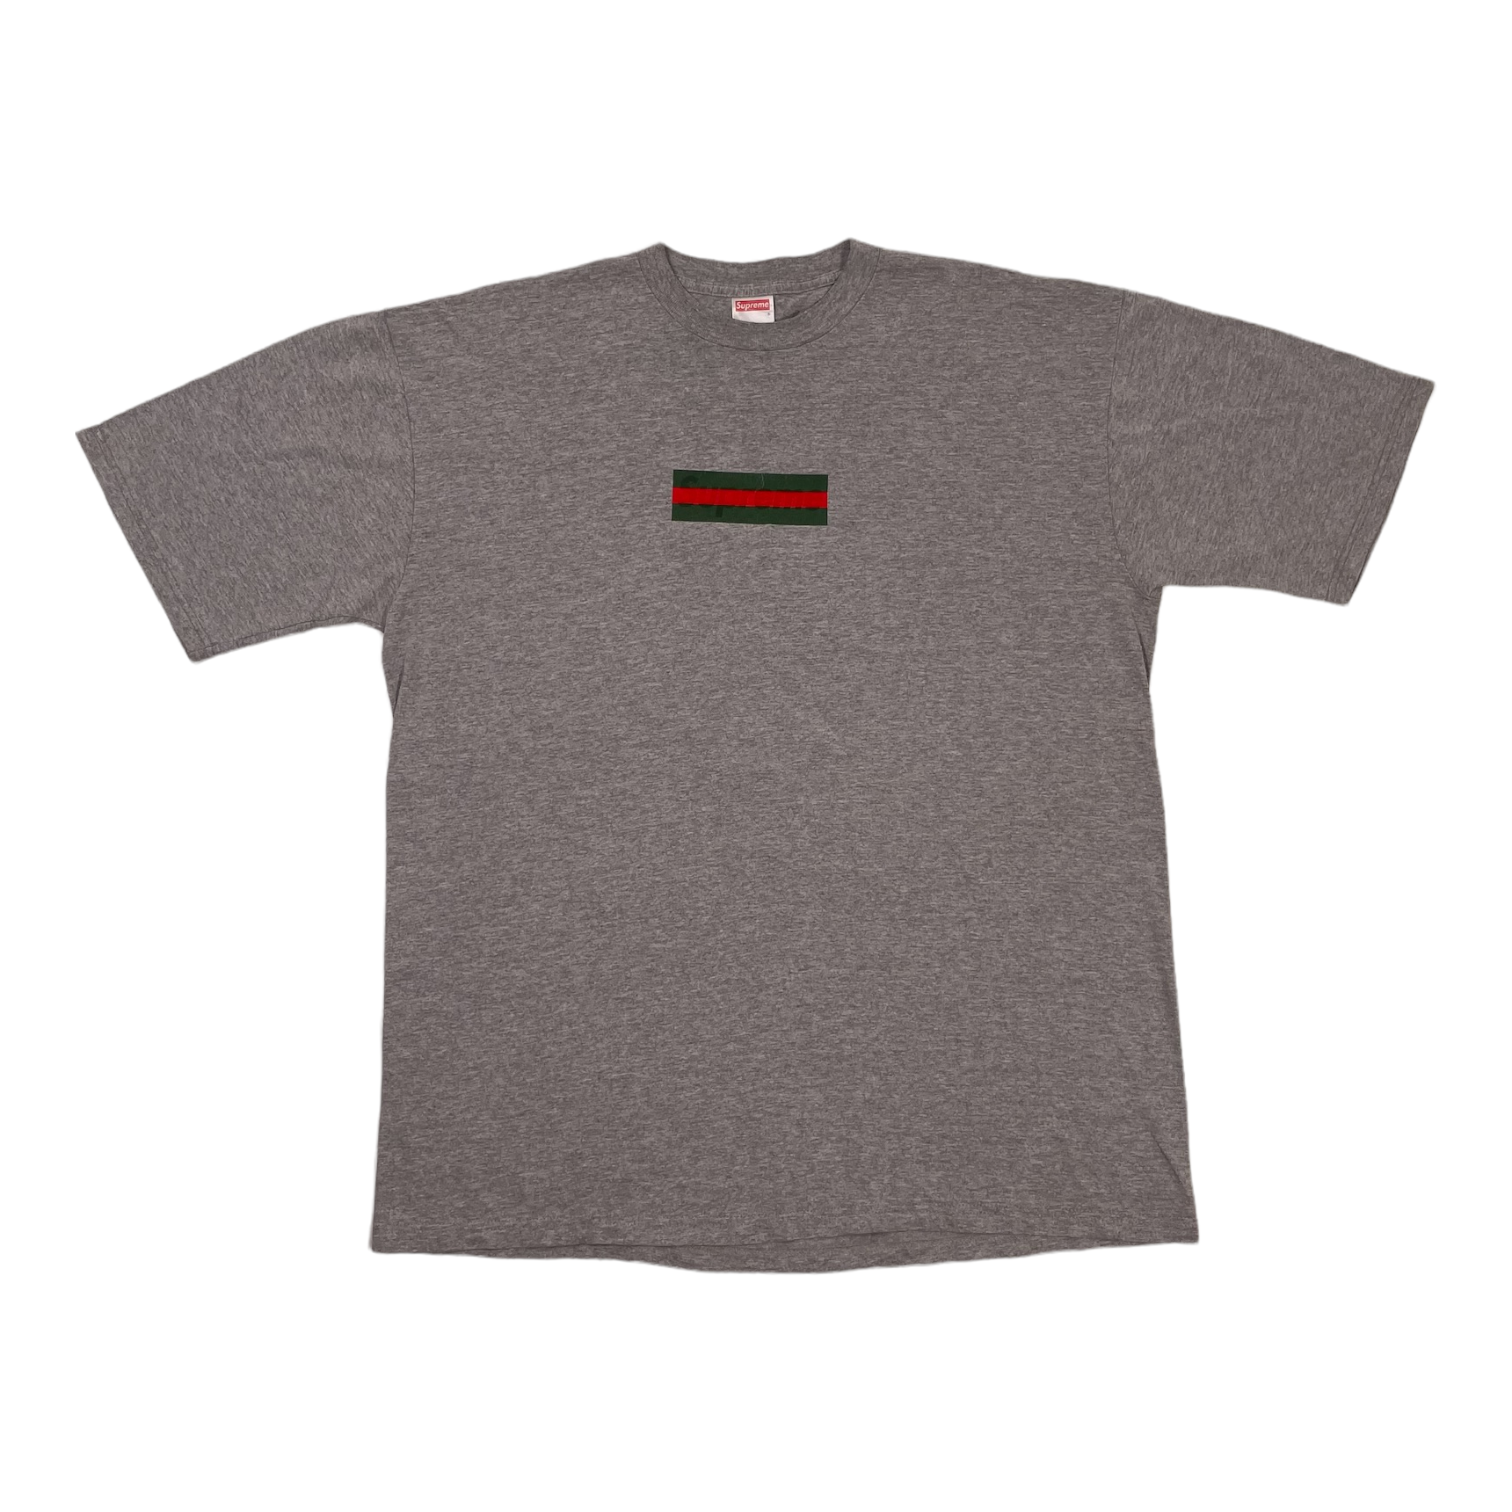 DESIGNER STEALS 📈🔥 - Gucci Box Logo Short Sleeve Tee Shirt Grey Pre-Owned